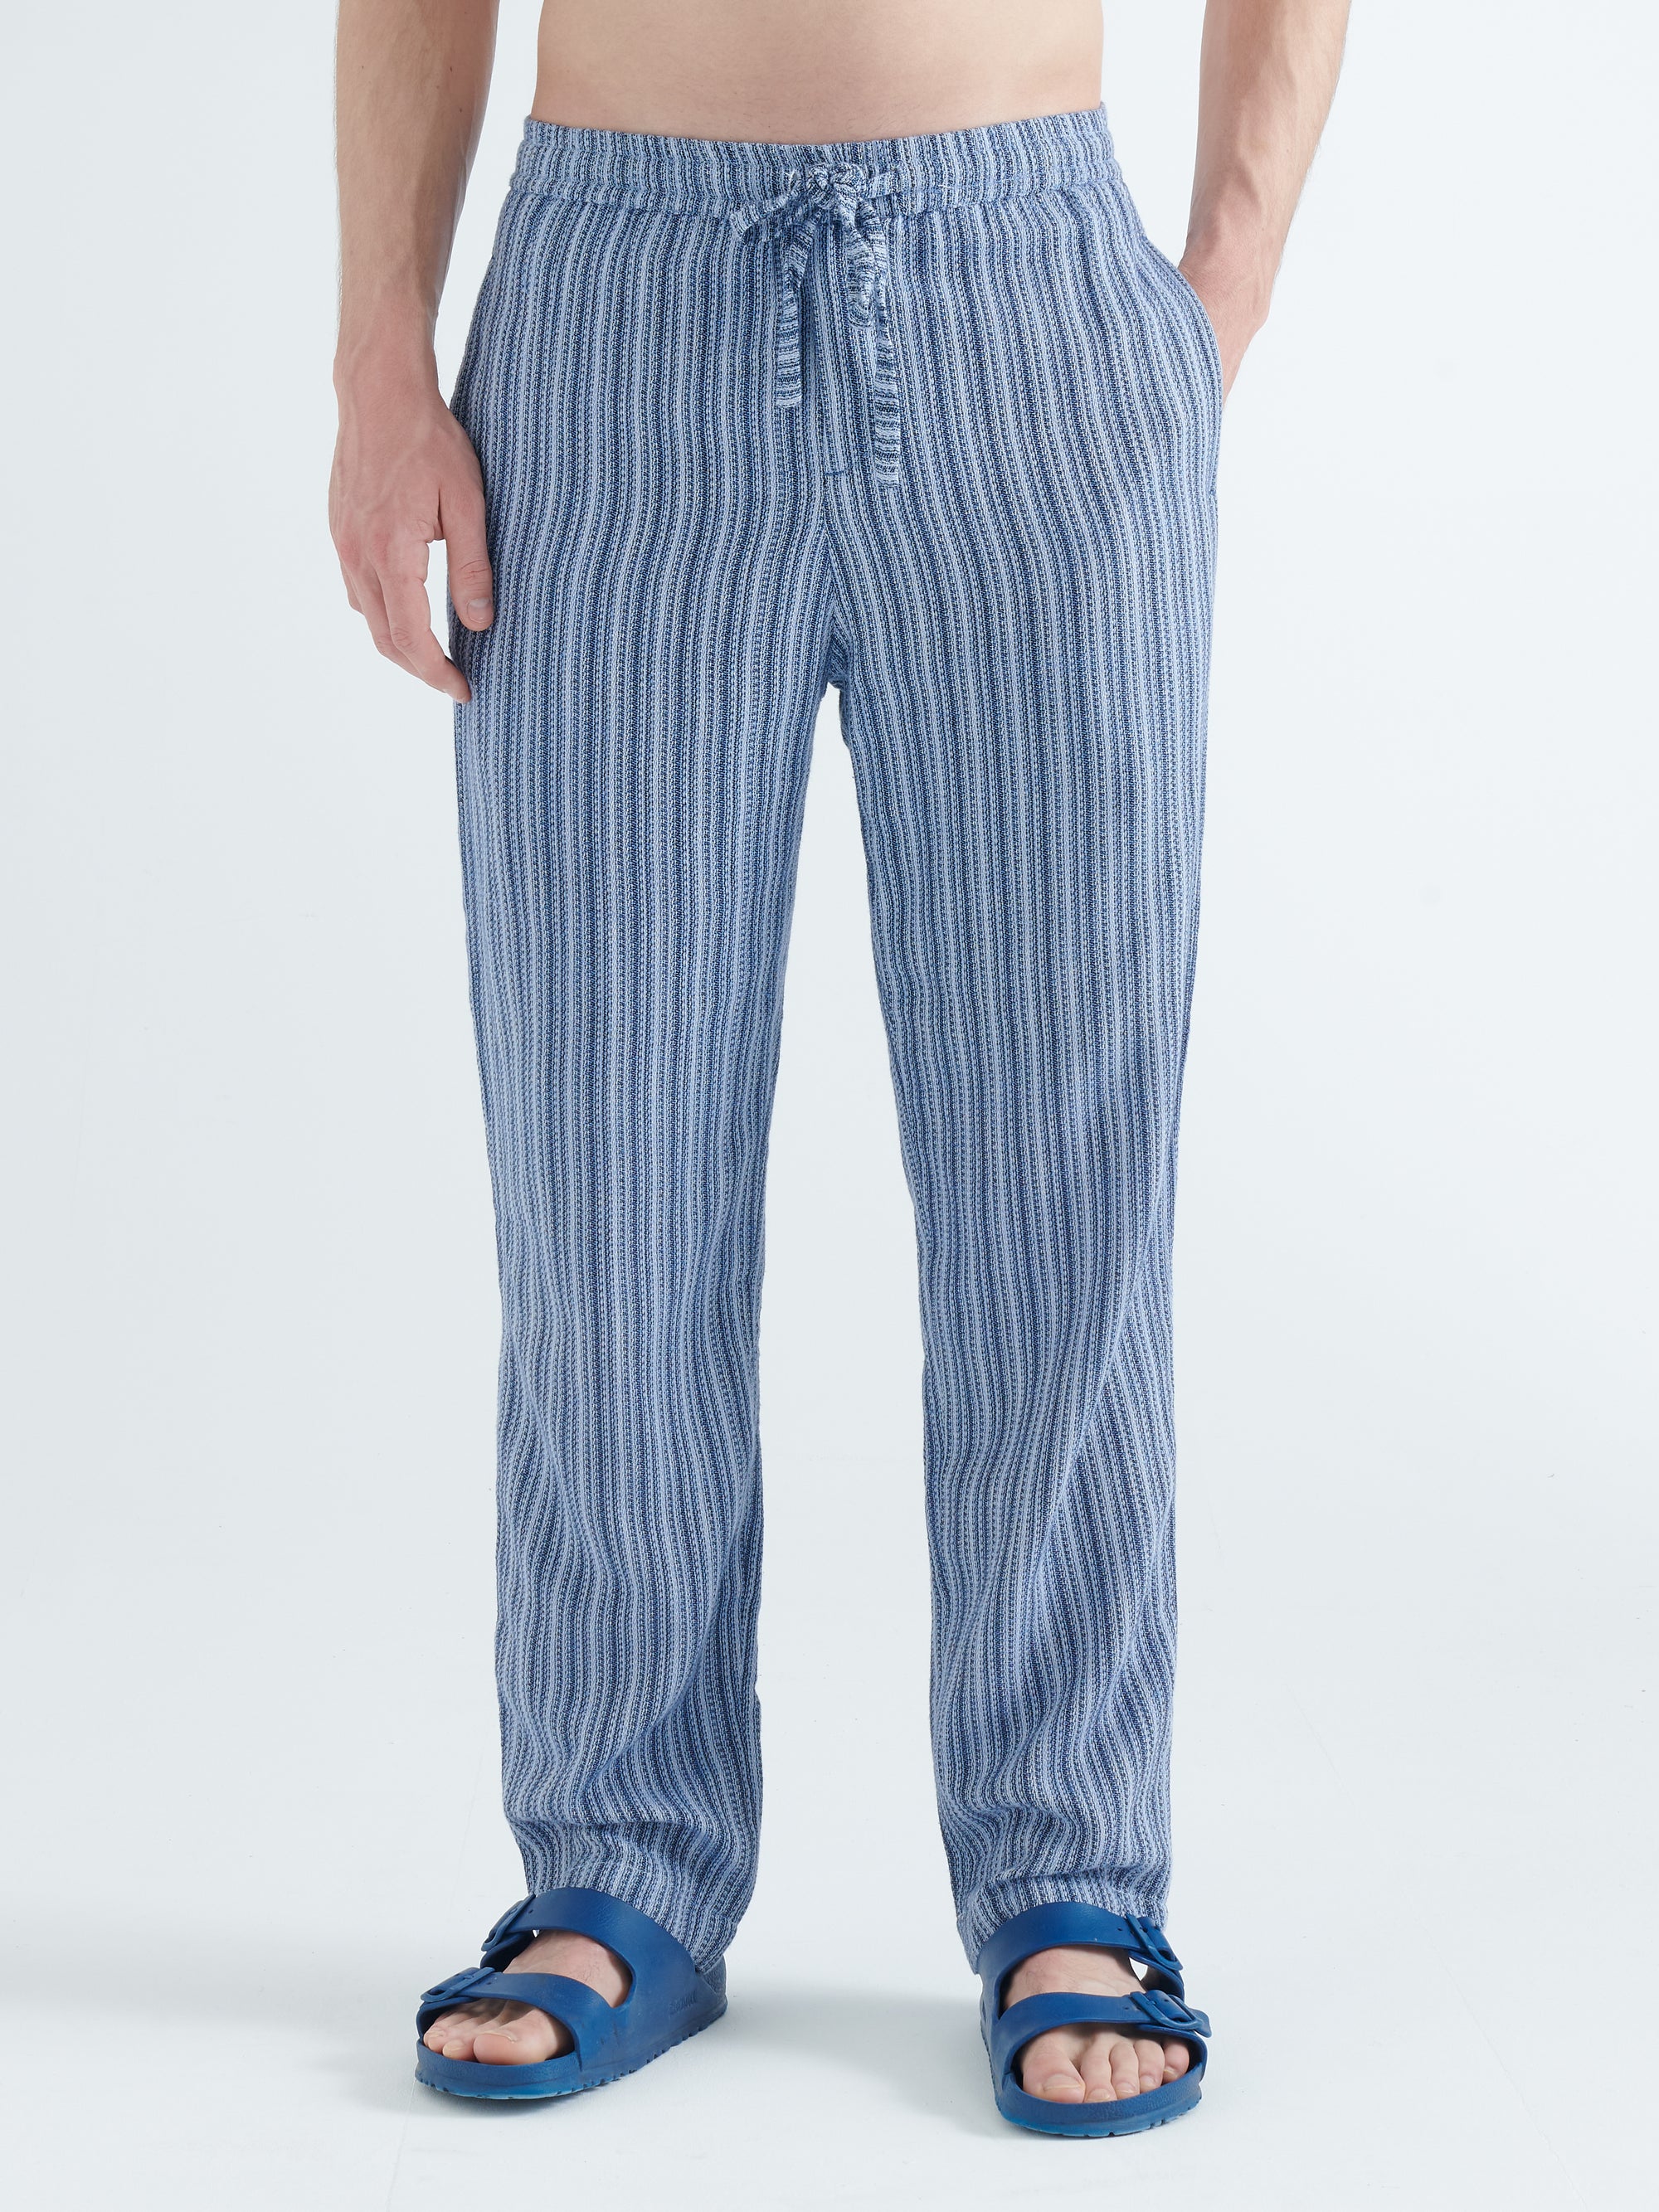 Malibu Cotton Trousers in Blue Stripes